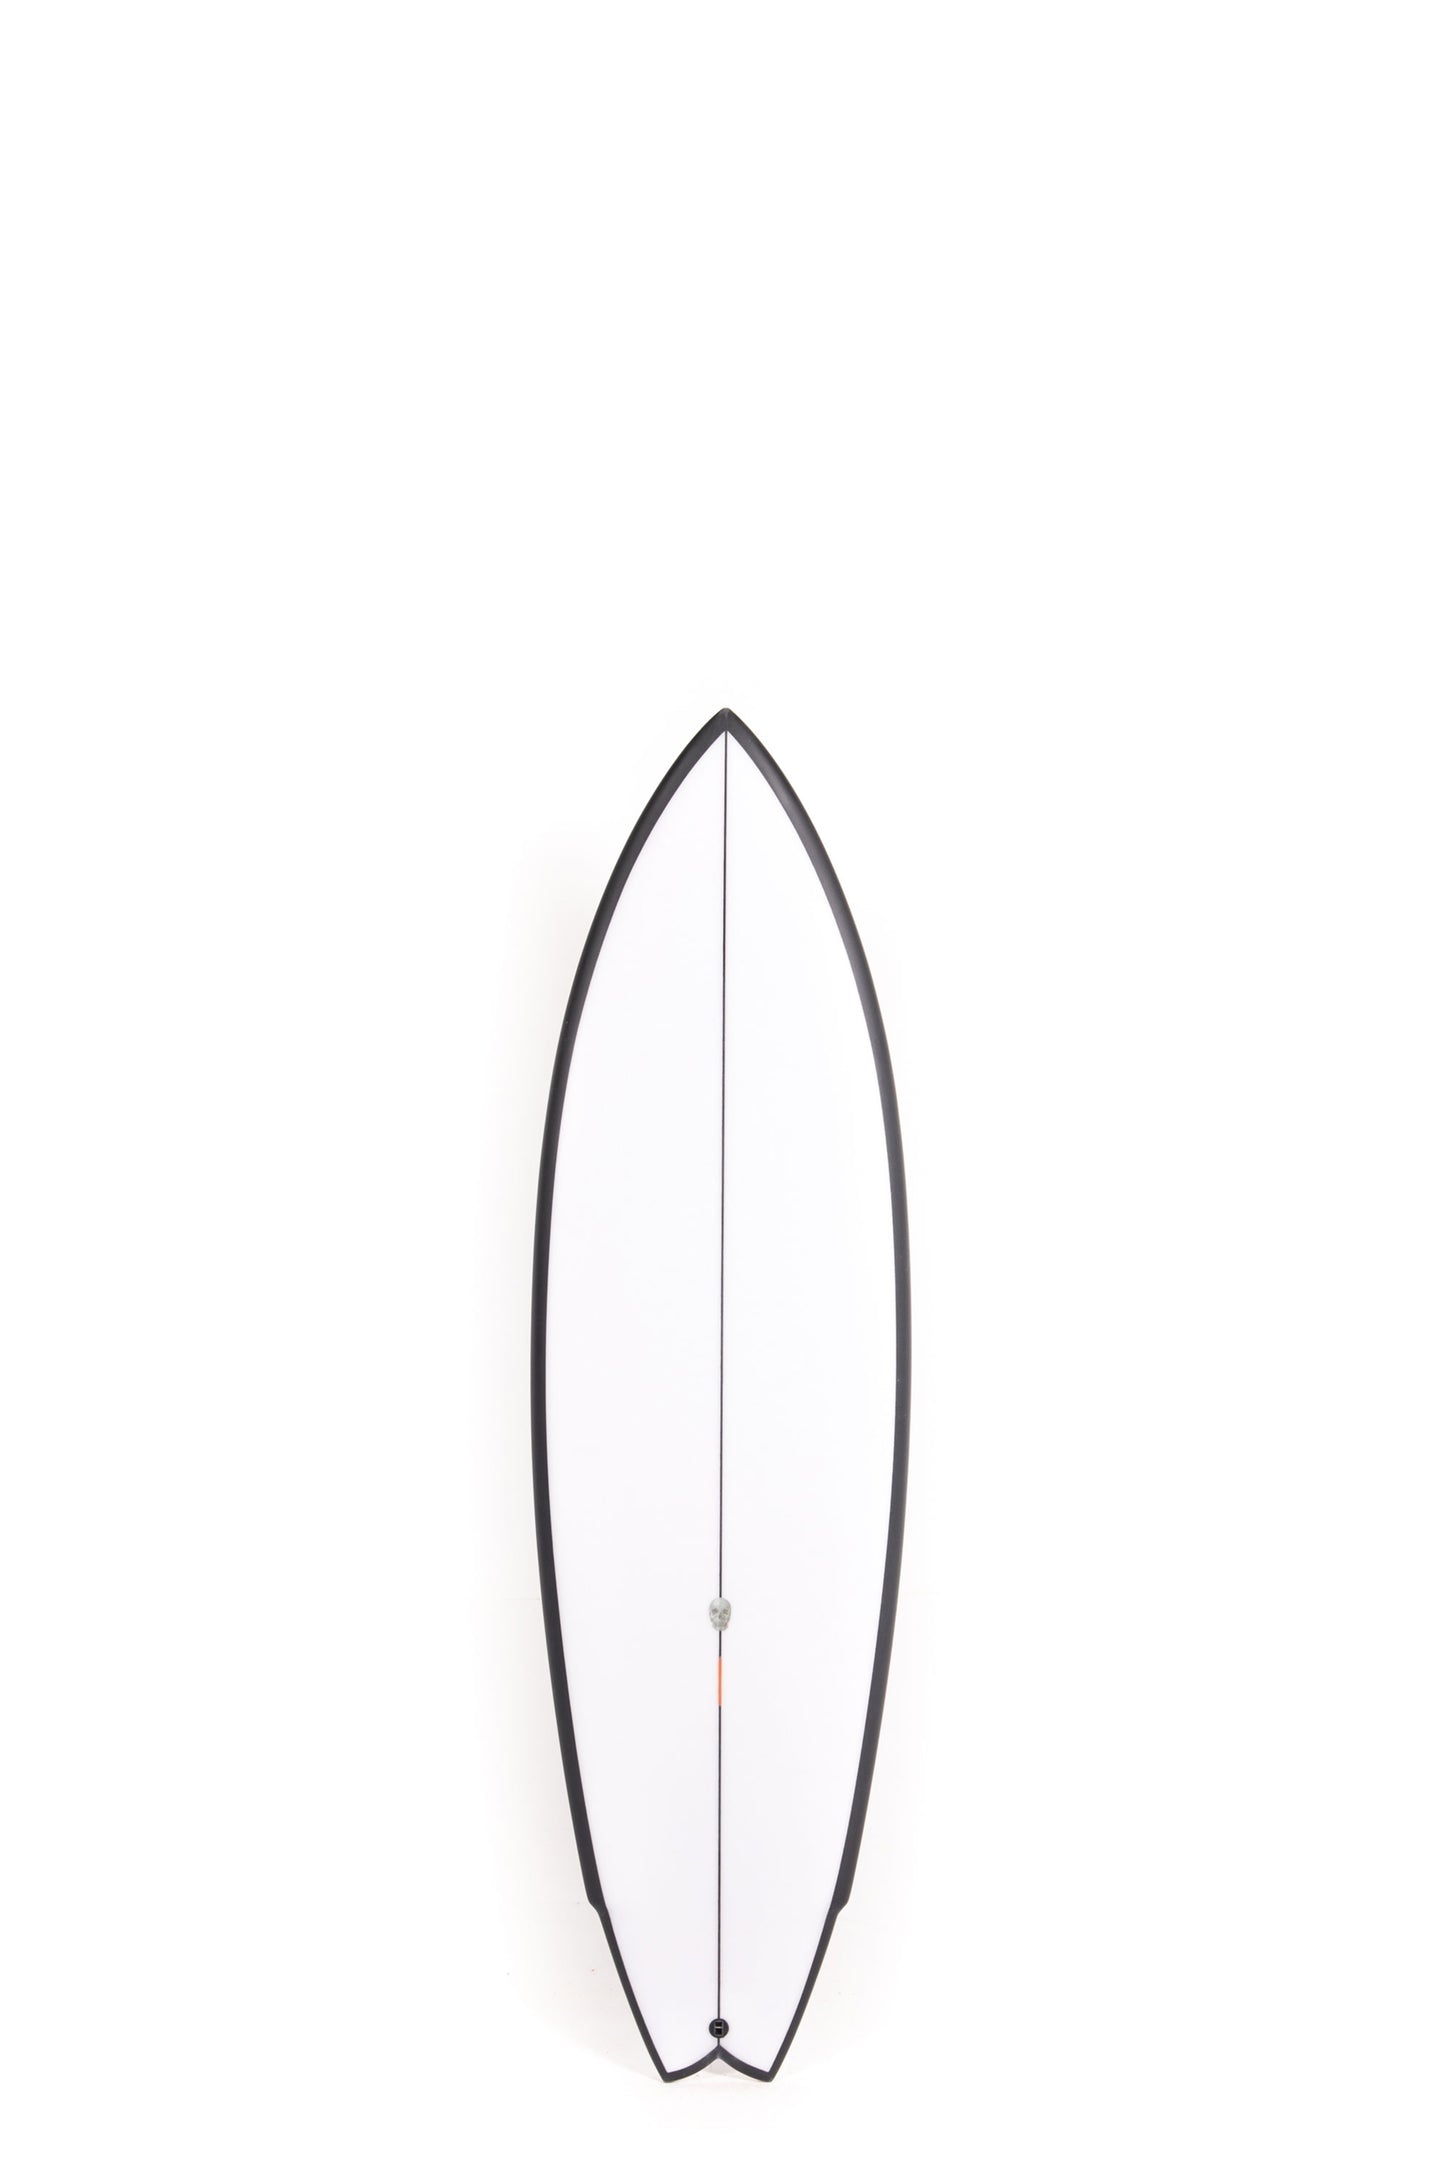 Pukas Surf Shop - Christenson Surfboards - LANE SPLITTER SWALLOW - 6'0" x 20 1/4 x 2 3/4 x 35,20L - CX05819